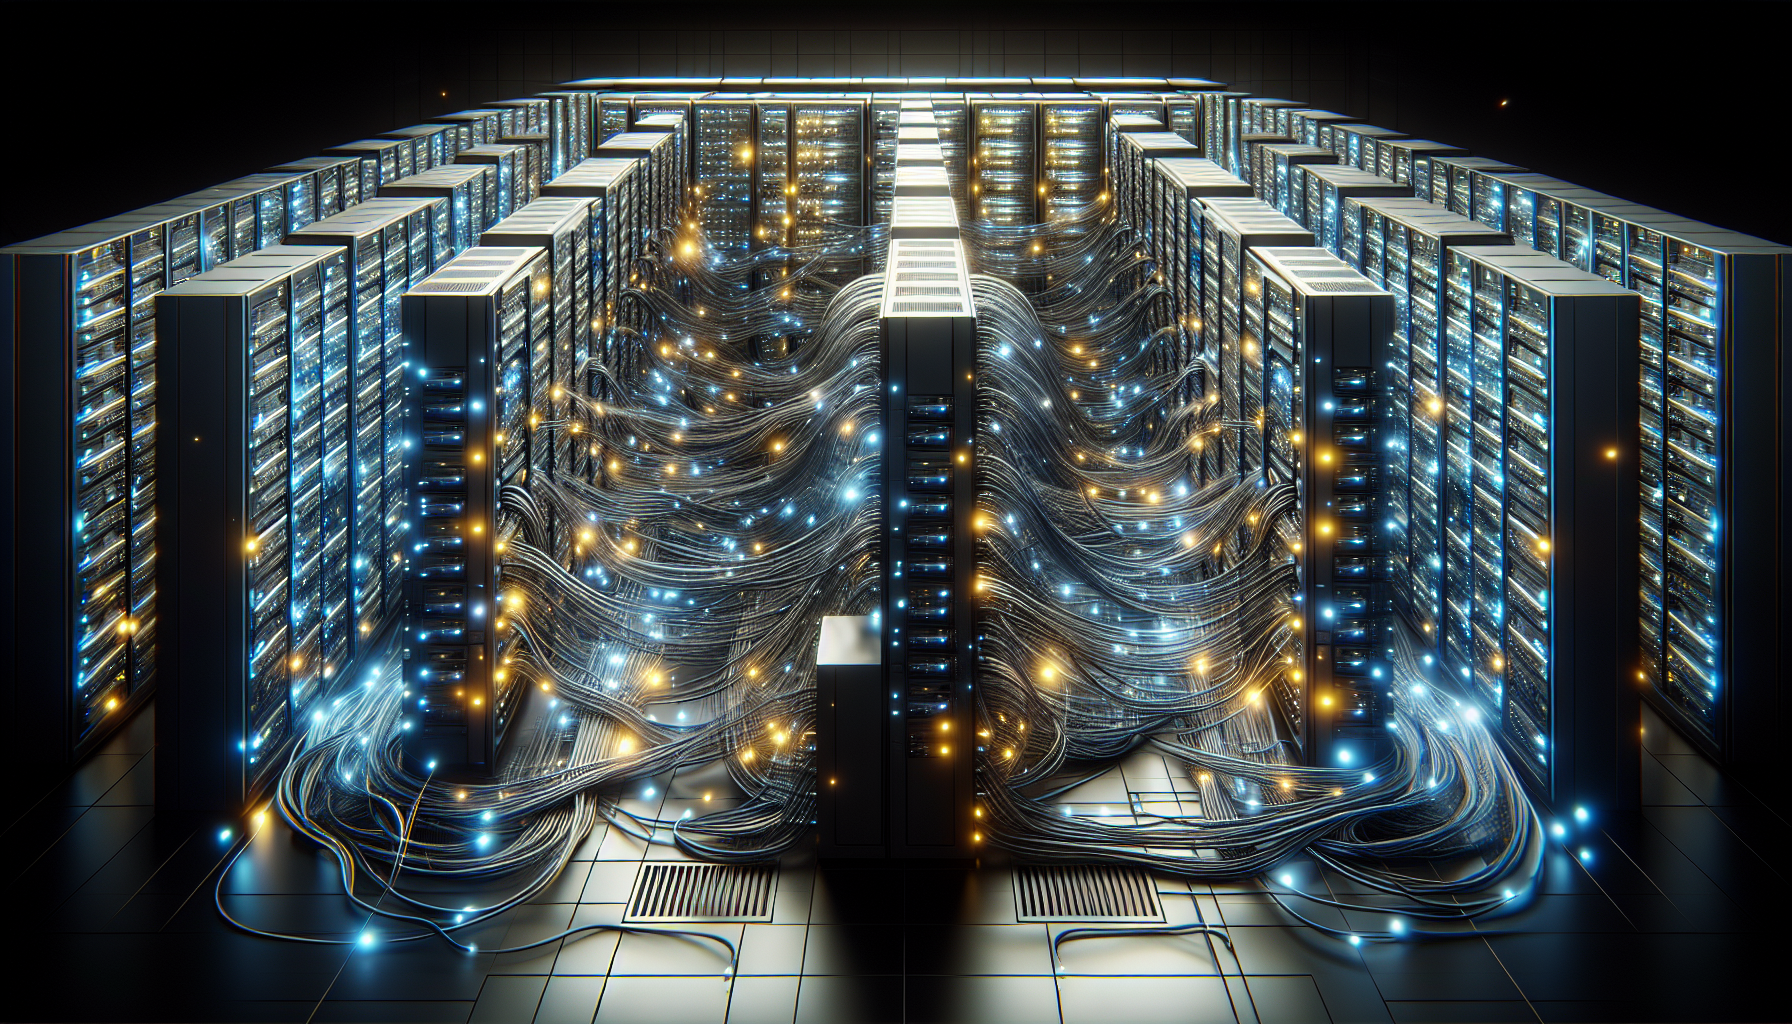 Illustration of a server room with multiple servers representing reseller hosting plans